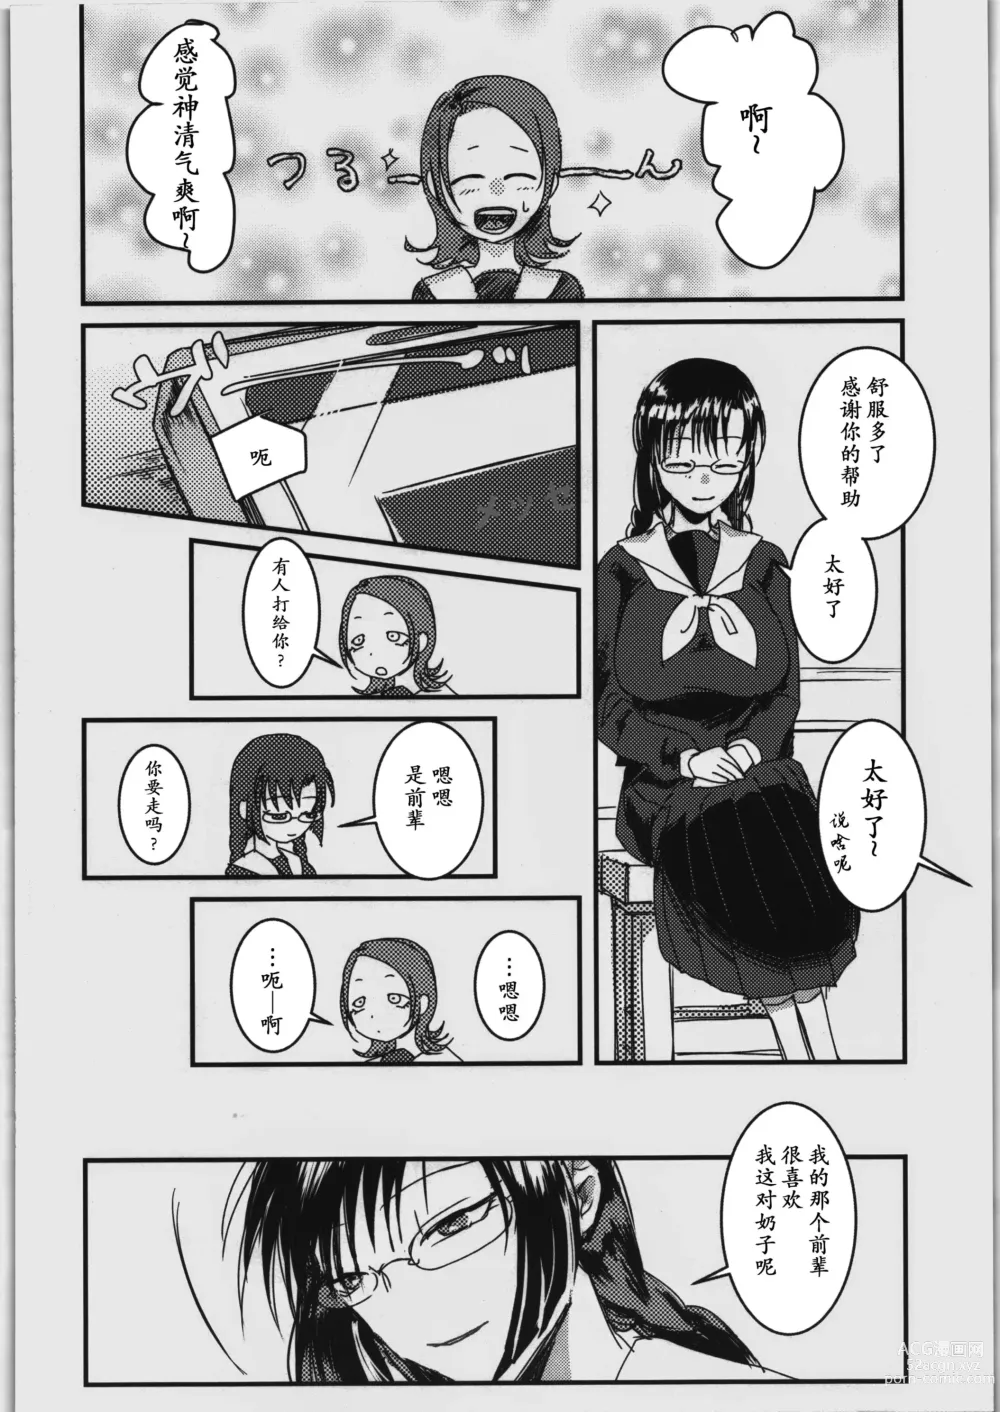 Page 12 of doujinshi Riyuu no Nai Asobi